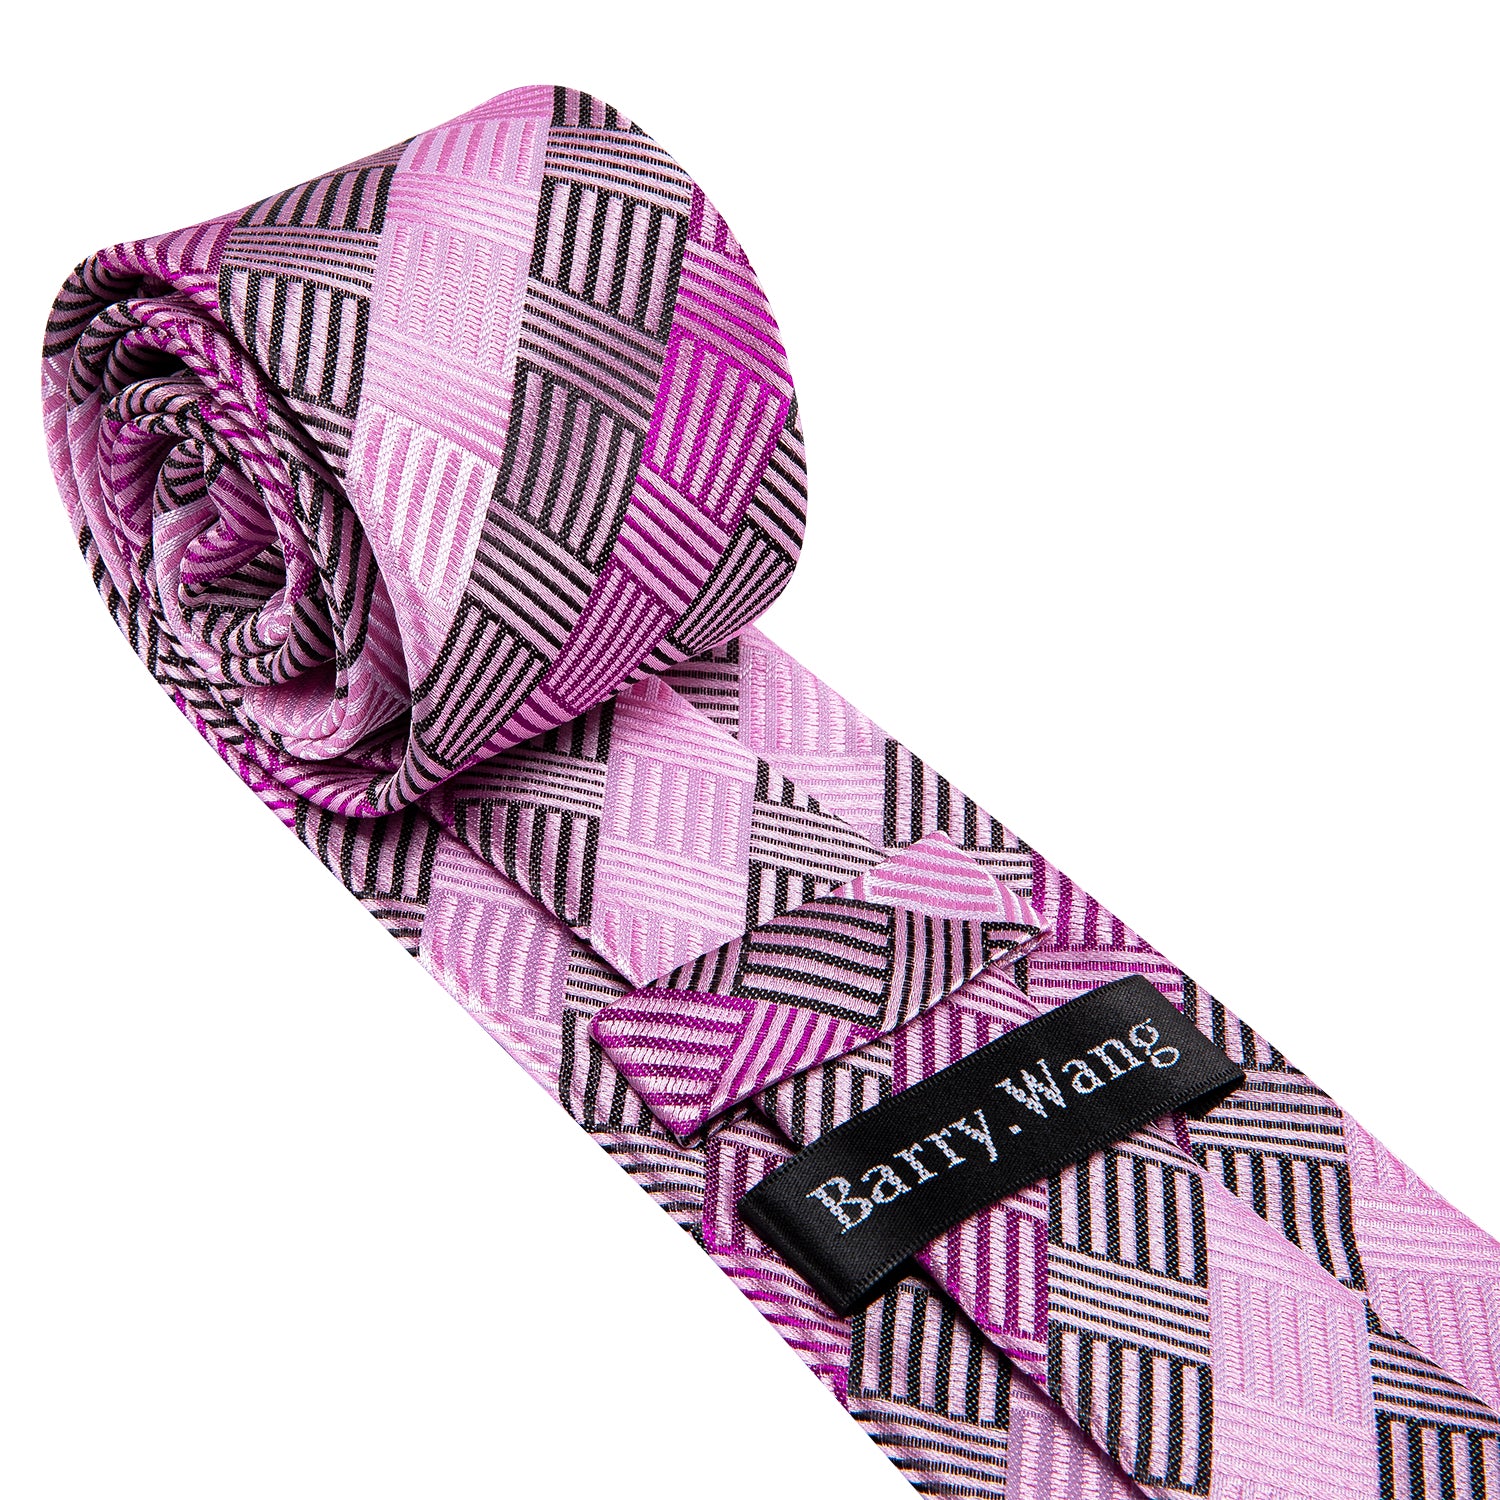 Pink Geometric Plaid Tie Pocket Square Cufflinks Set